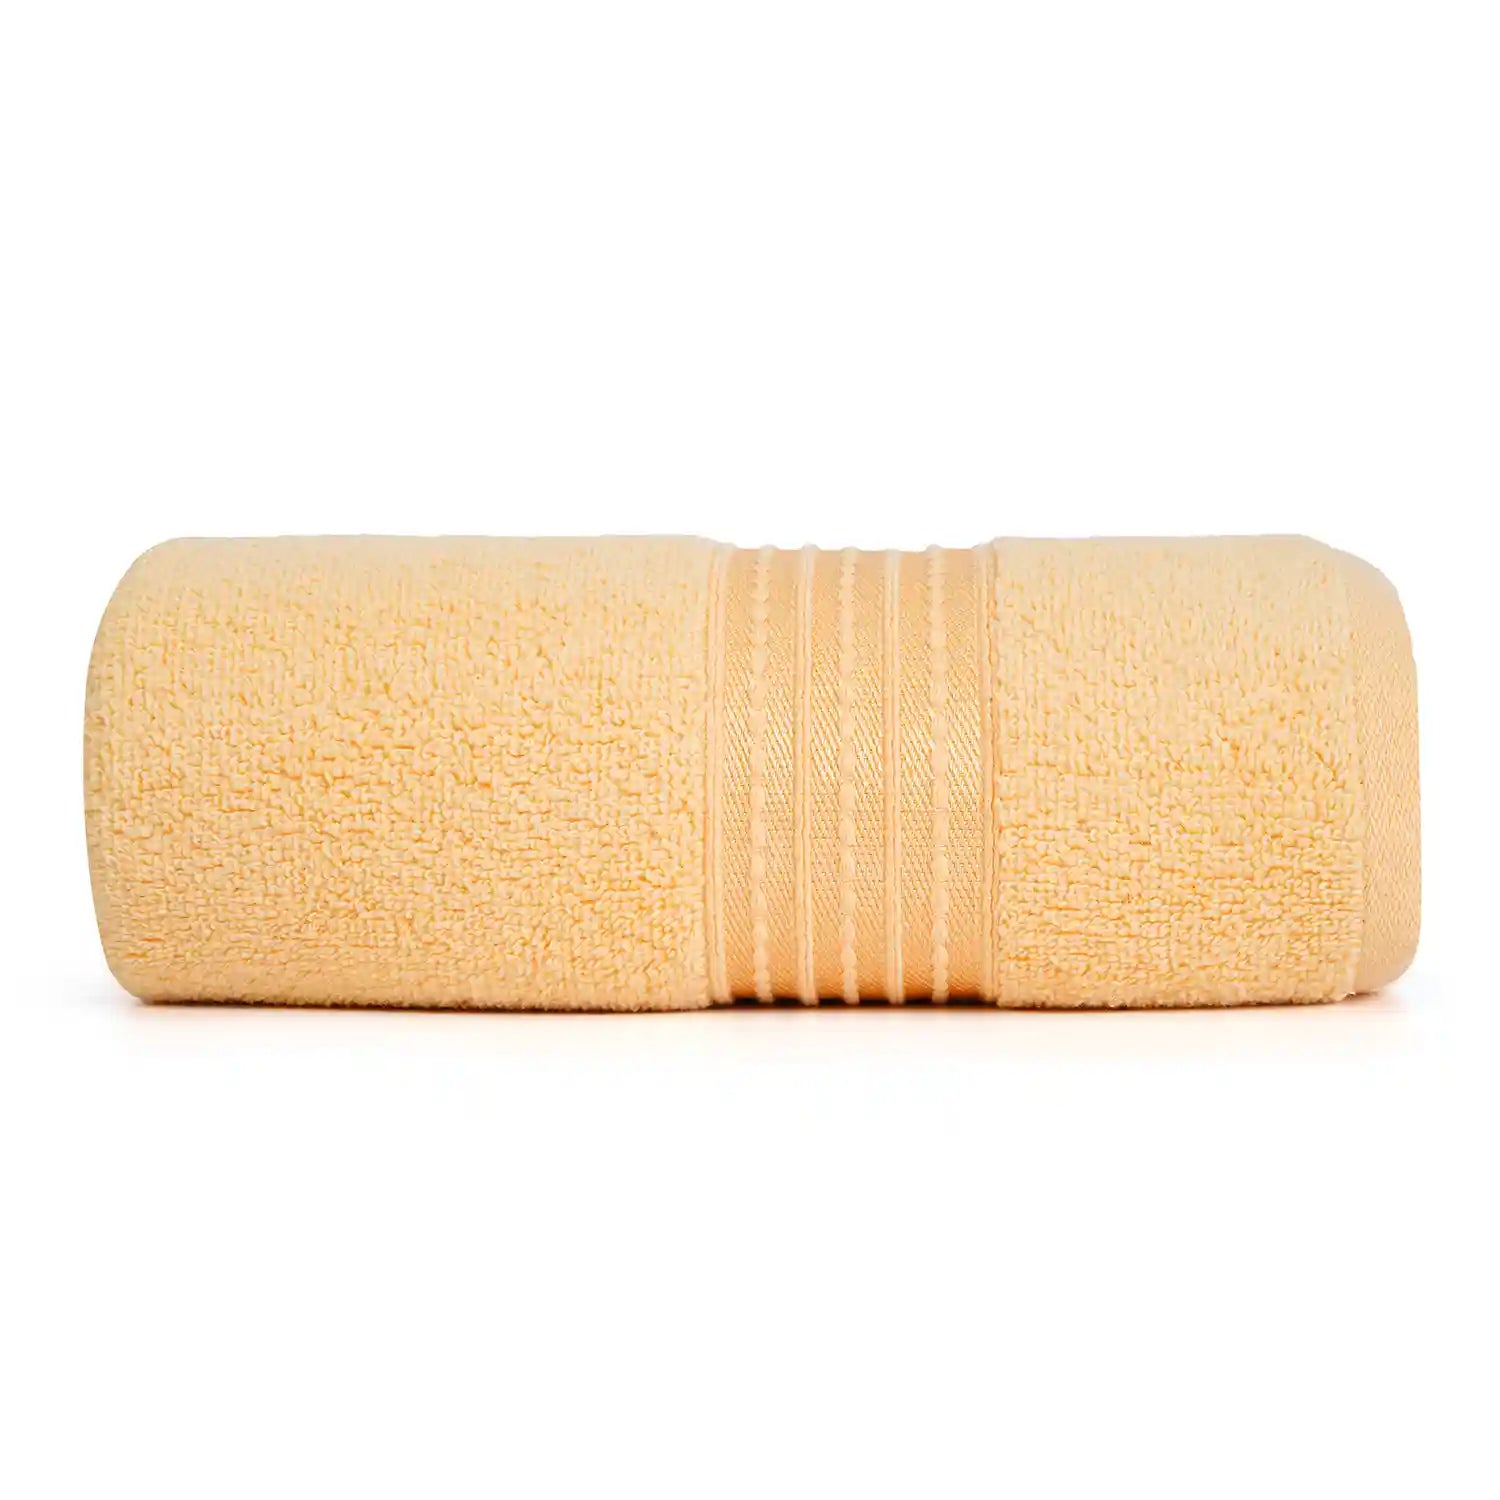 Bath towel, natural cotton bath towel, bamboo bath towel, allo vera bath towel